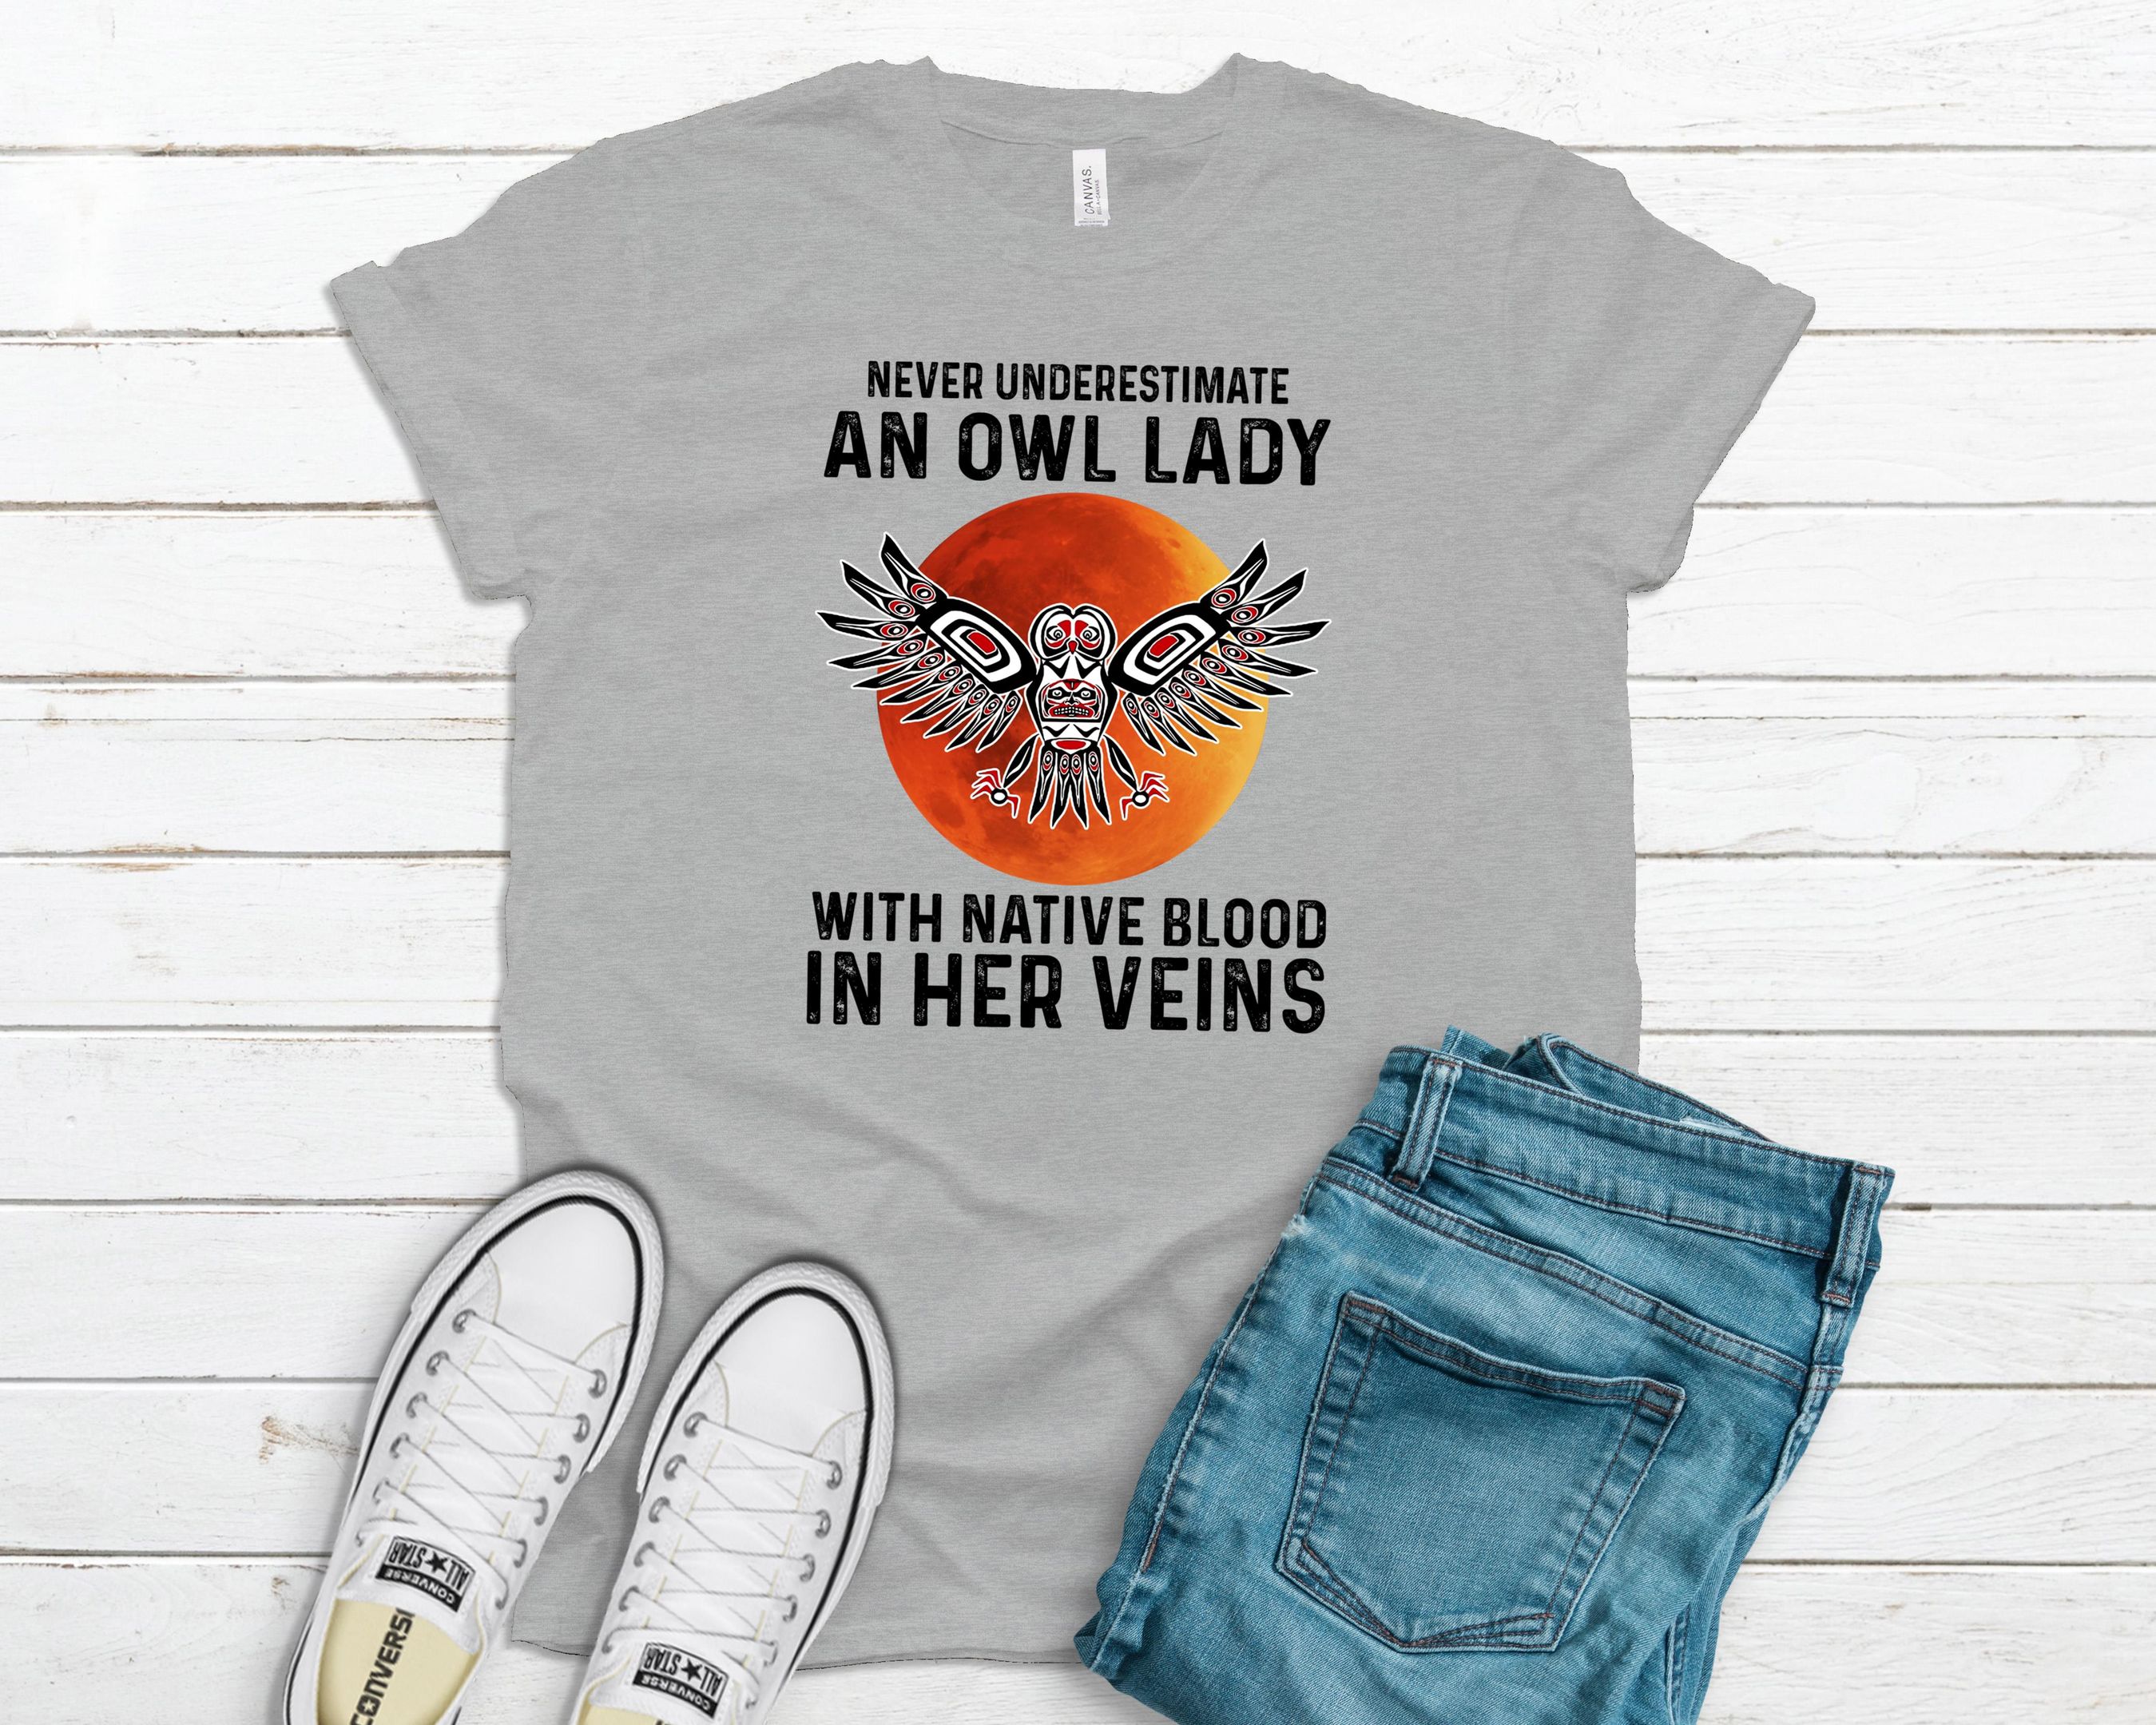 An Owl Lady Shirt, Native Blood Shirt, Native American Zodiac Sign Shirt